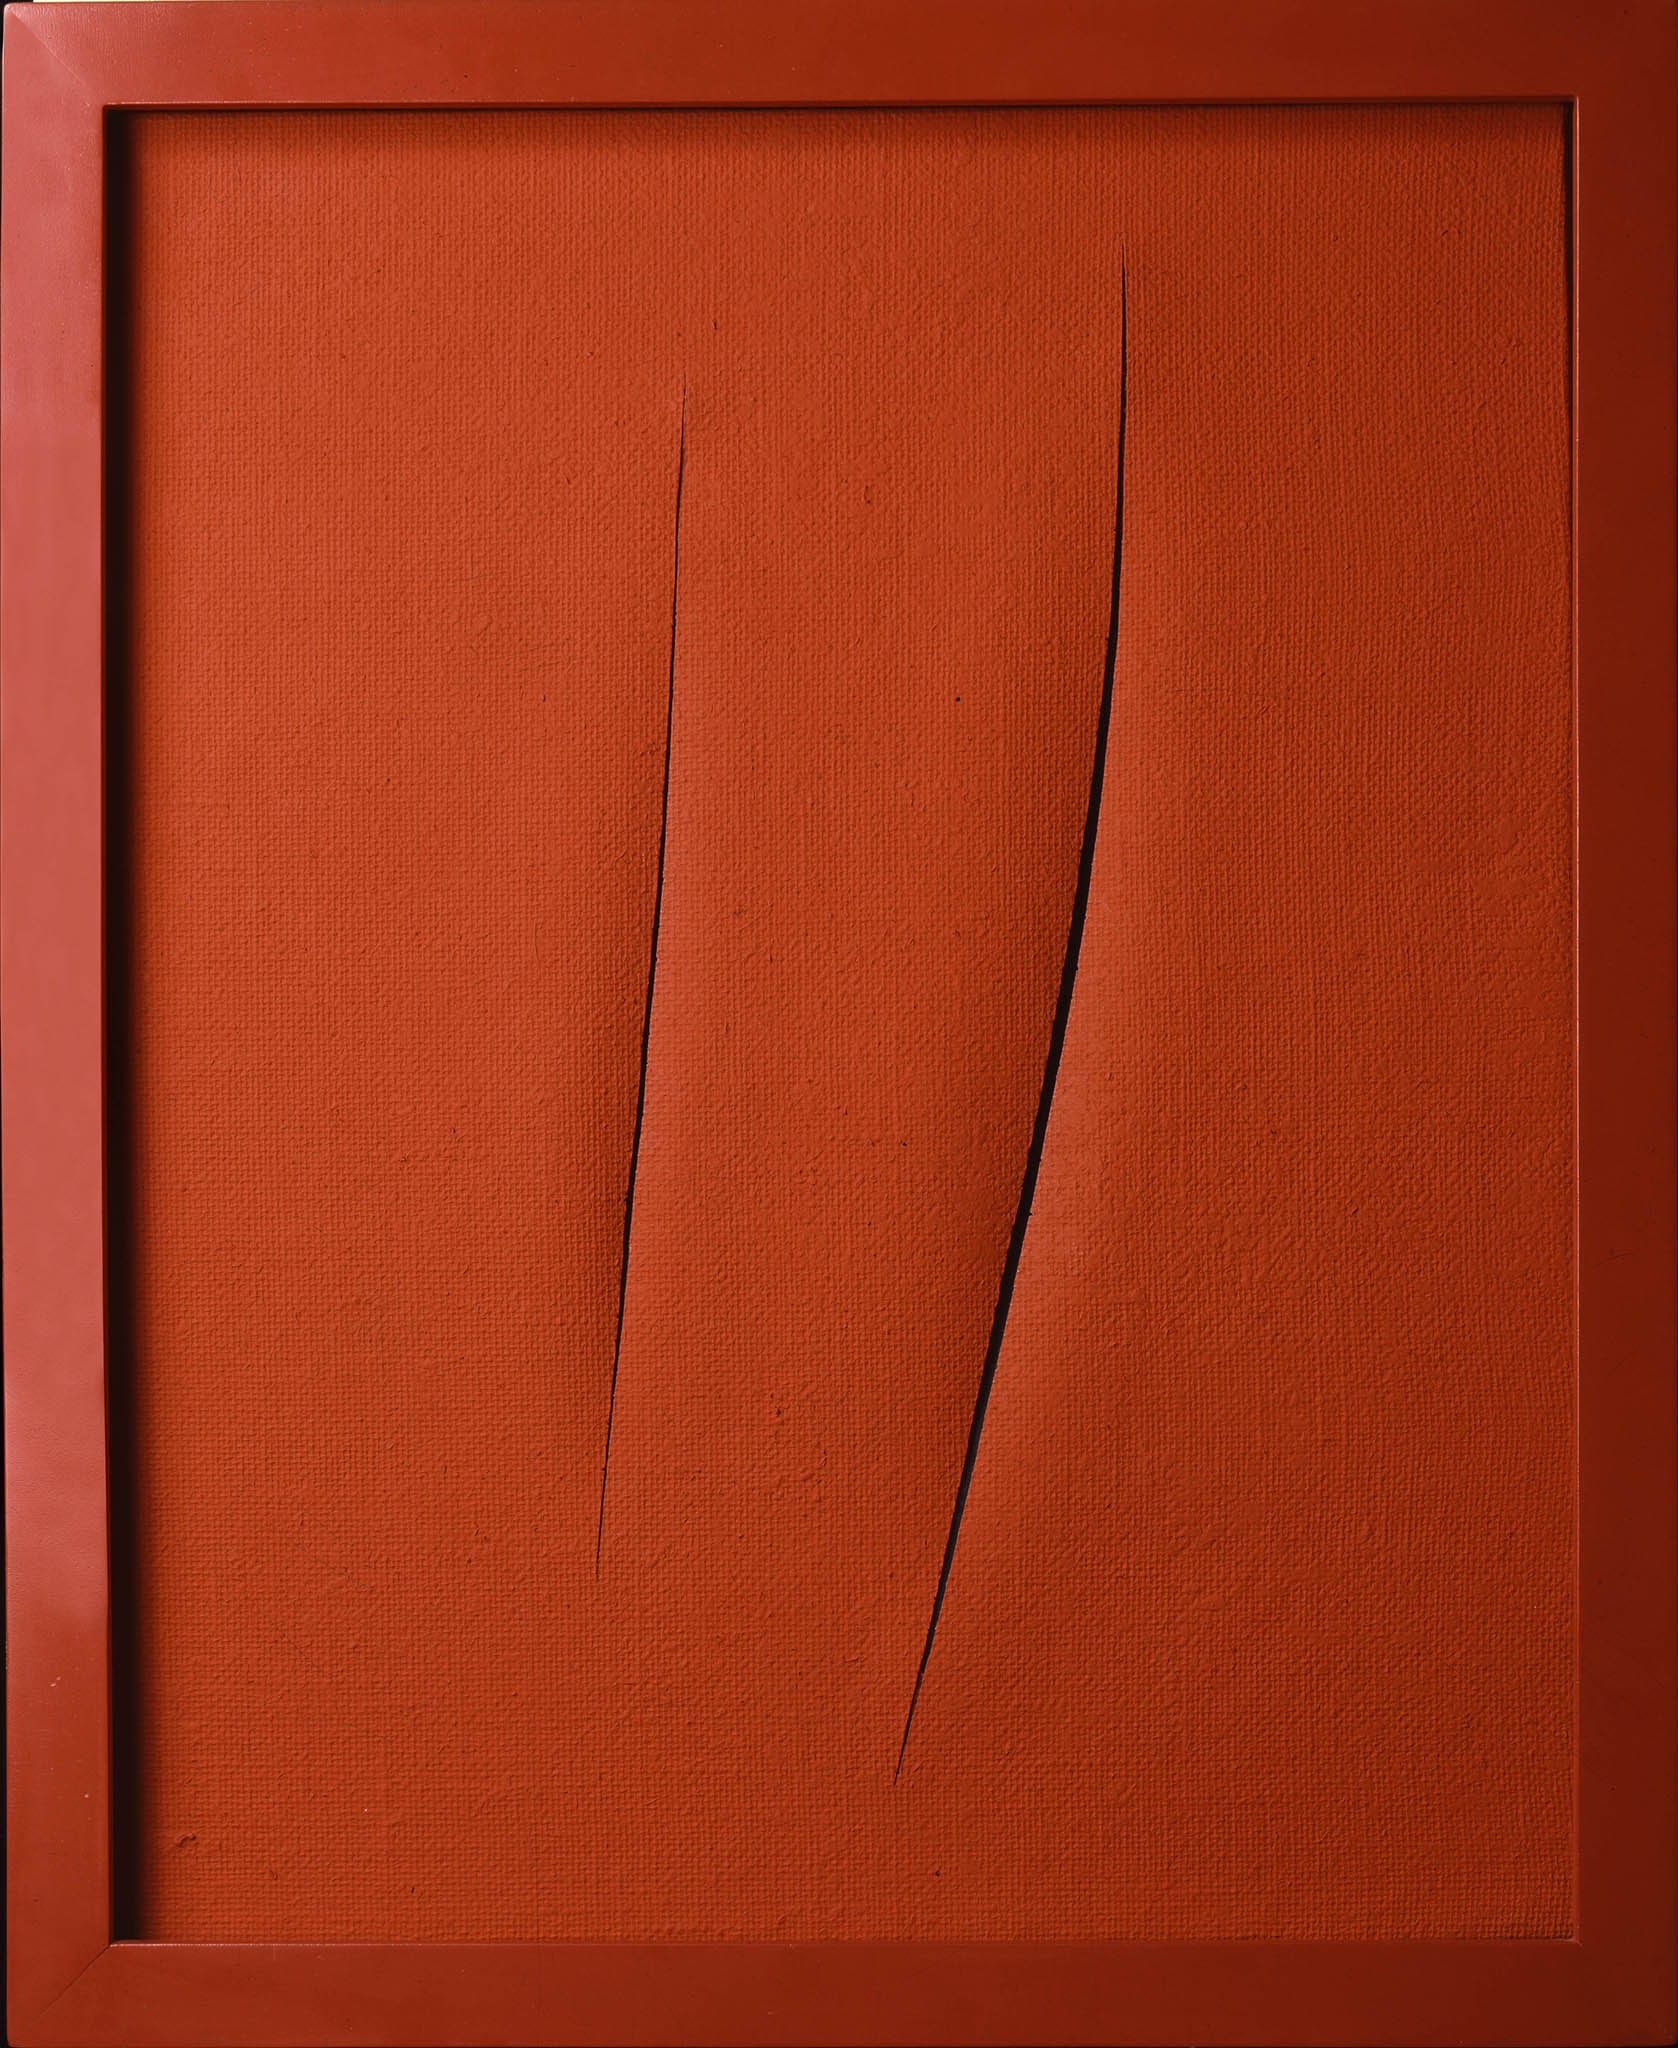 Lucio Fontana - Attese, 1961 - Smalto opaco su tela con cornice laccata - GAM - Galleria Civica d'Arte Moderna e Contemporanea, Torino 